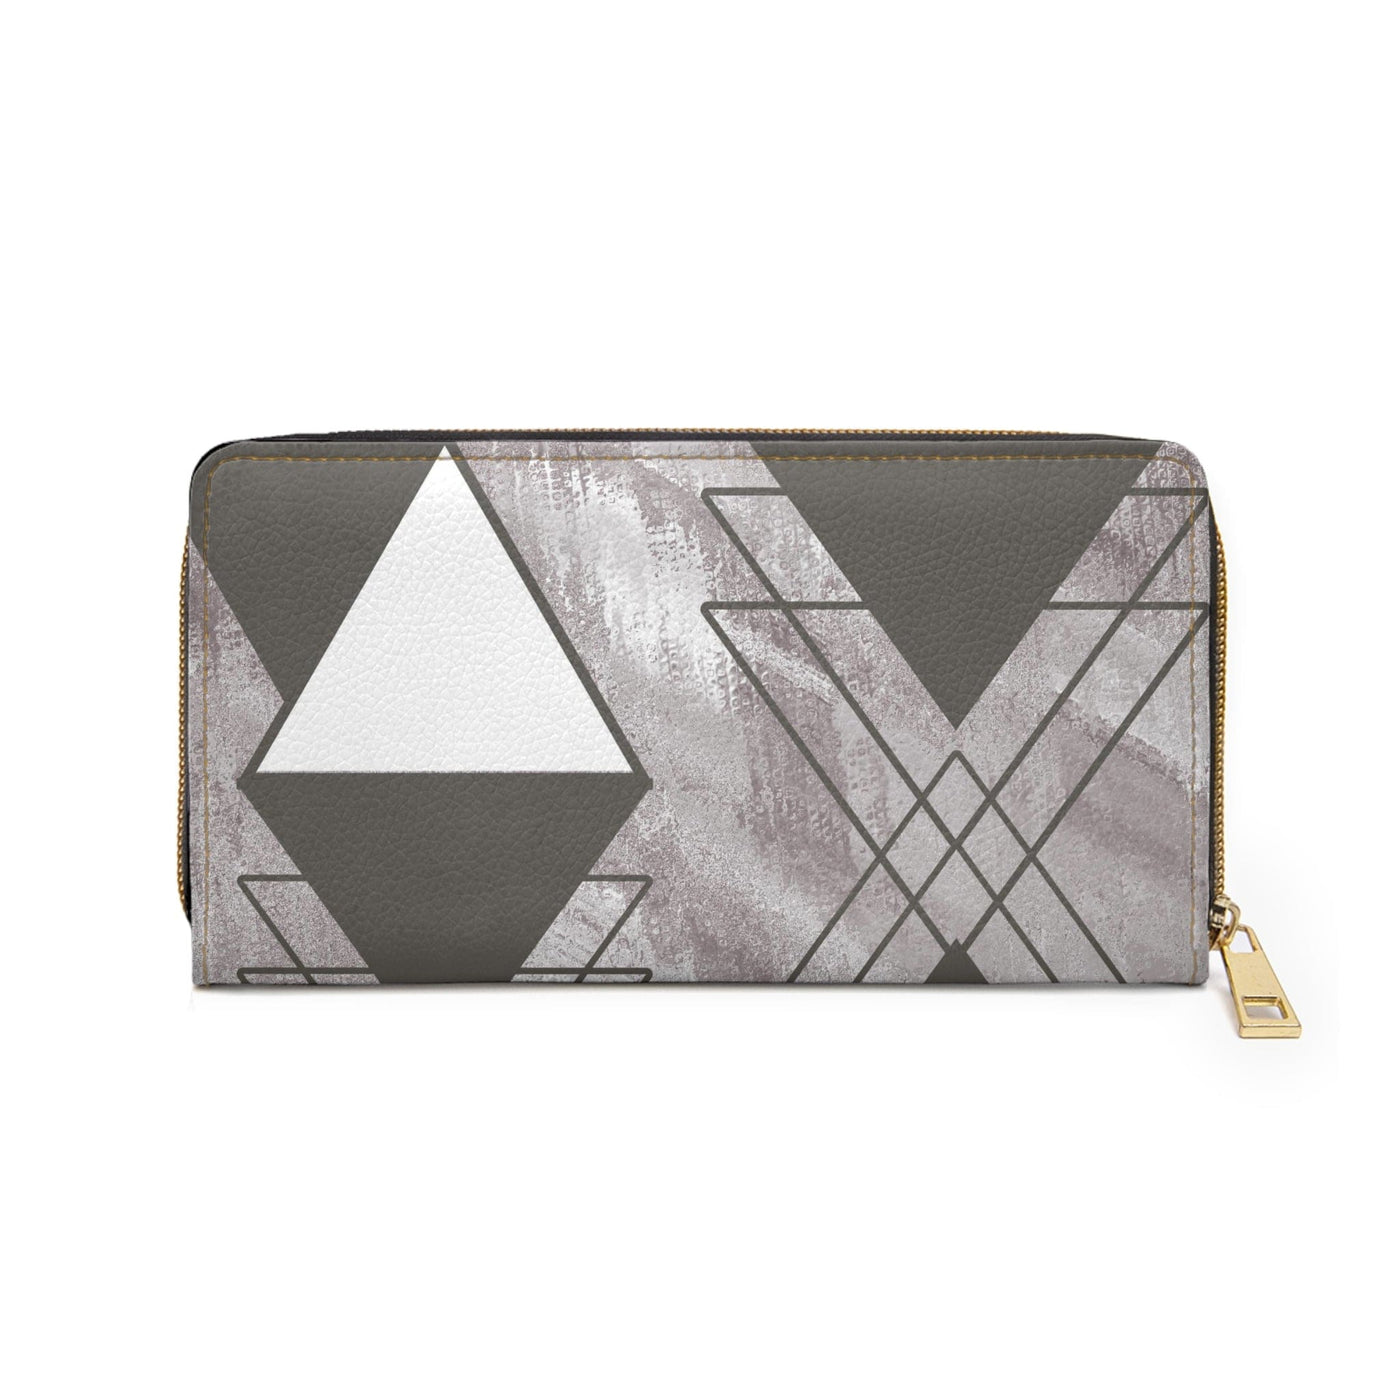 Zipper Wallet Ash Grey And White Triangular Colorblock - Bags | Zipper Wallets